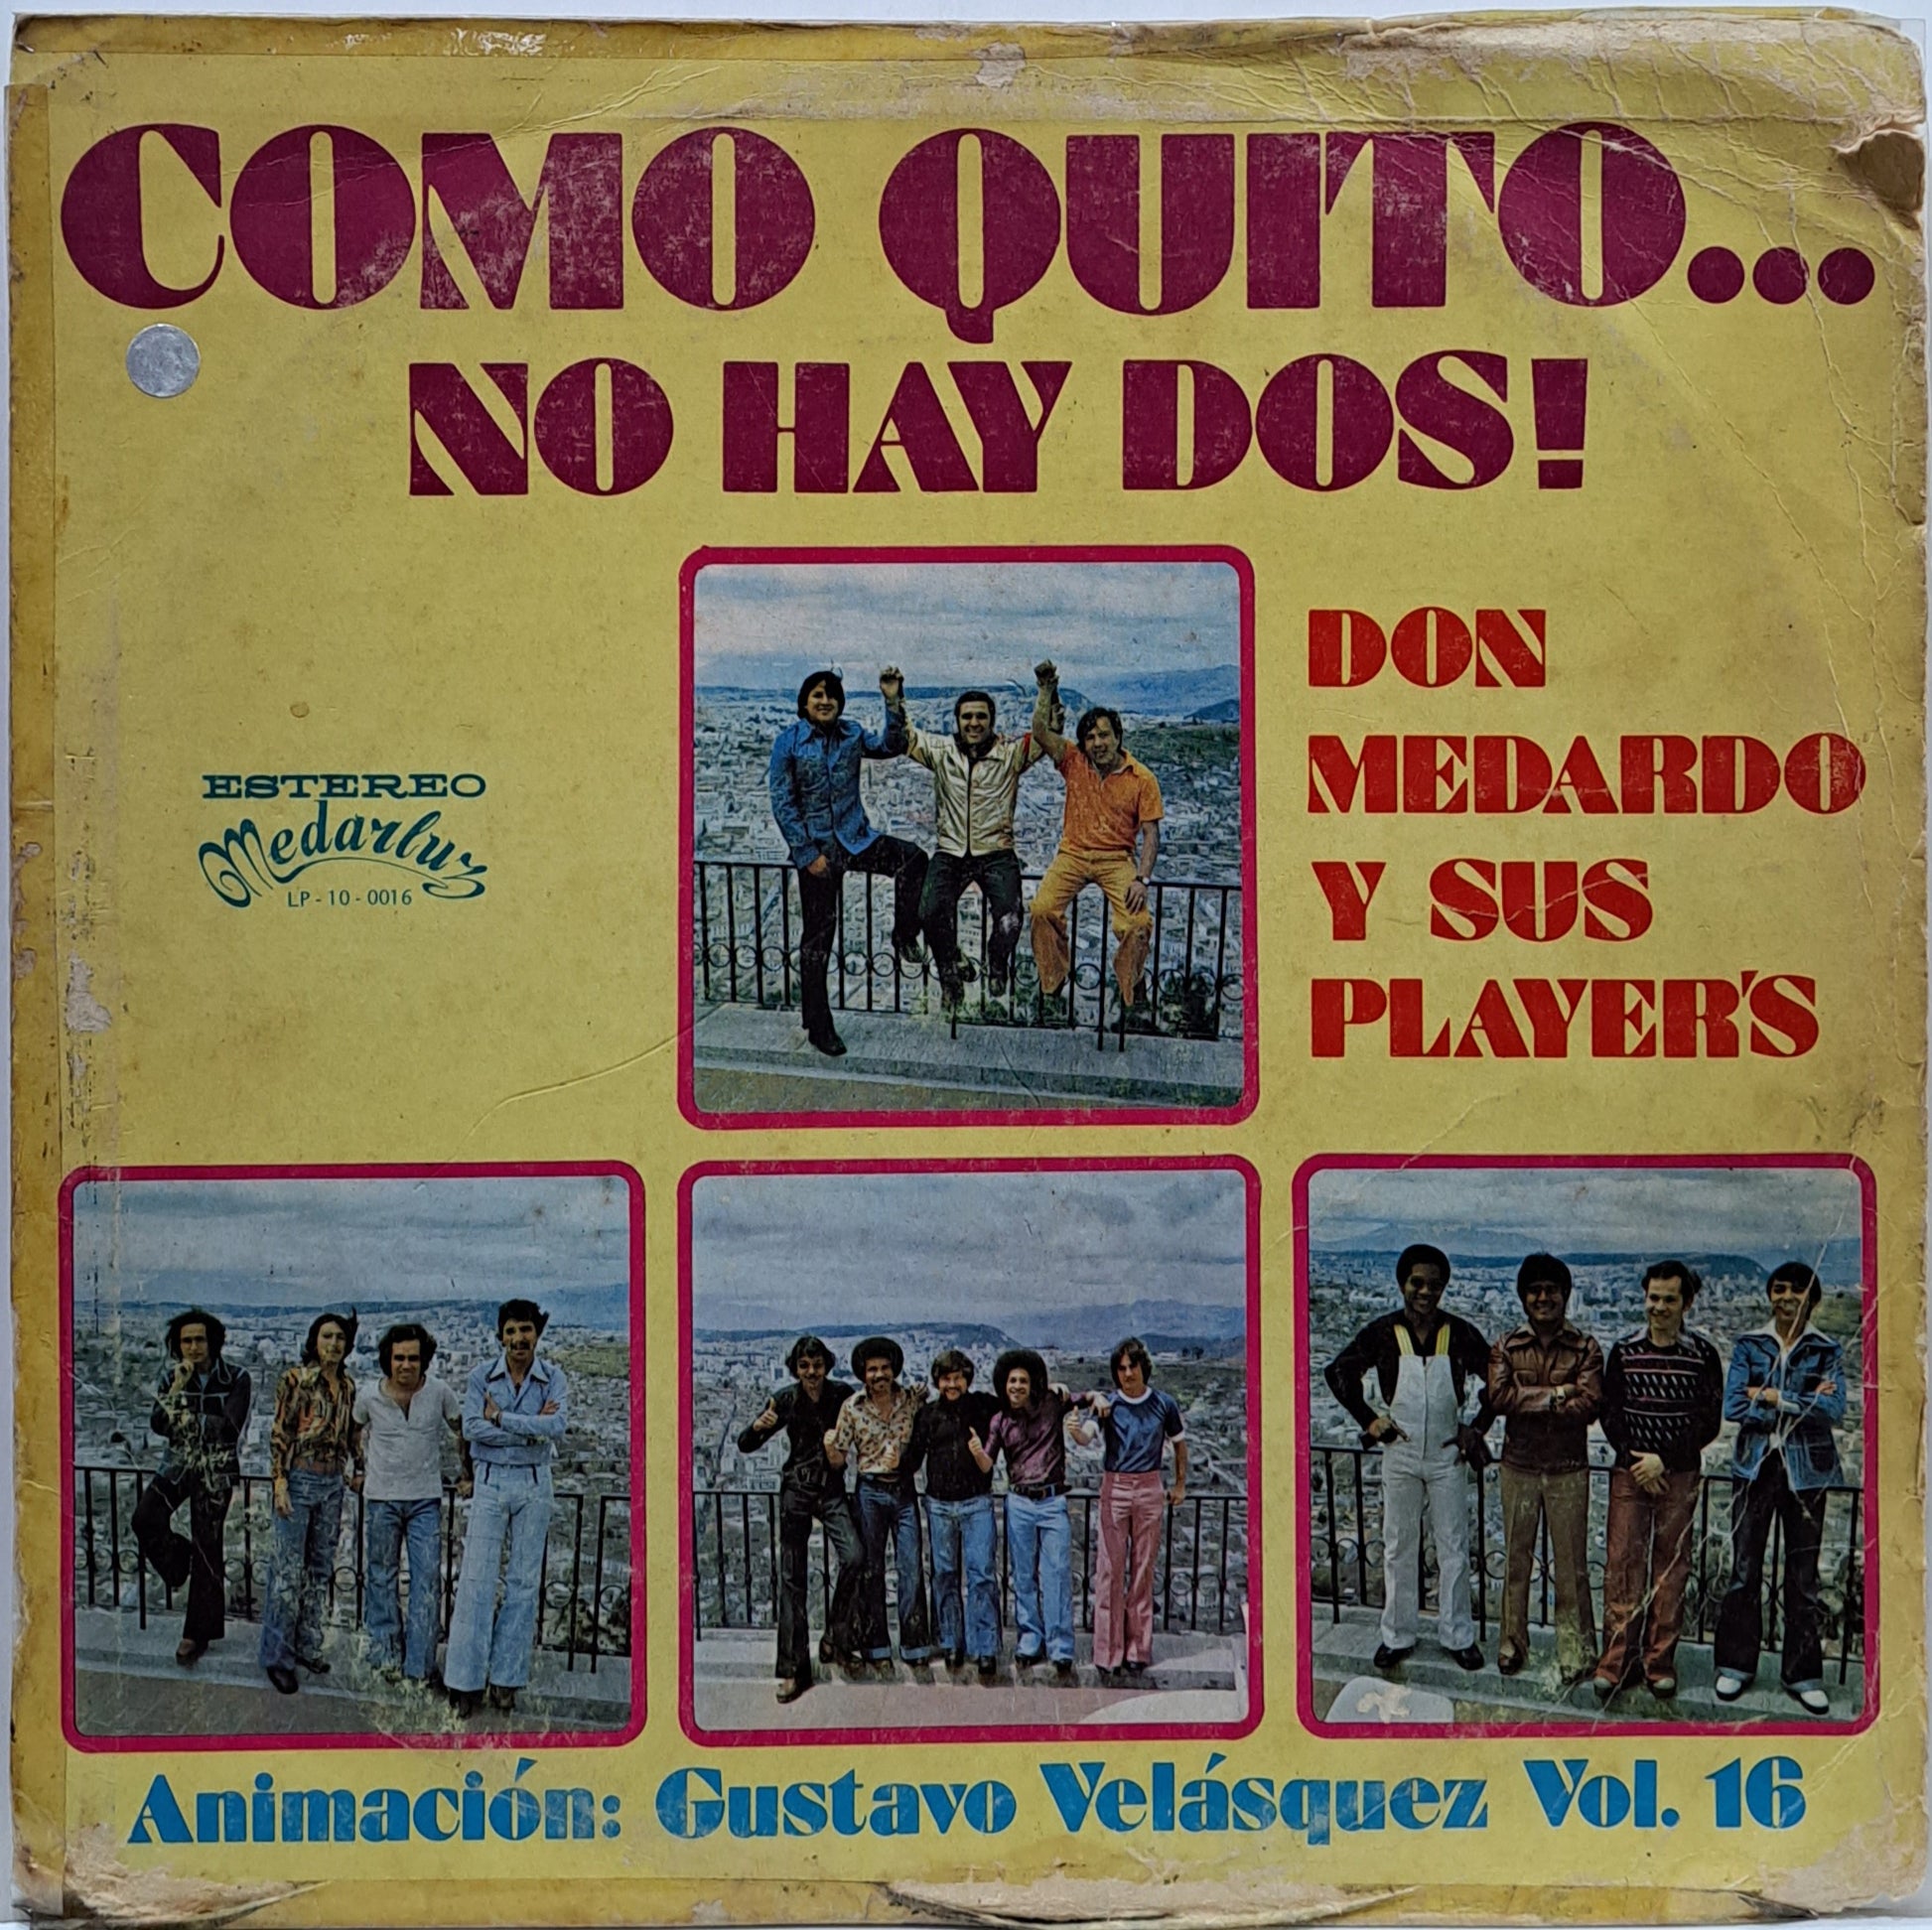 Discos Long Play, LP, LPs, Vinilos, Vynl de sus Grupos, Cantantes